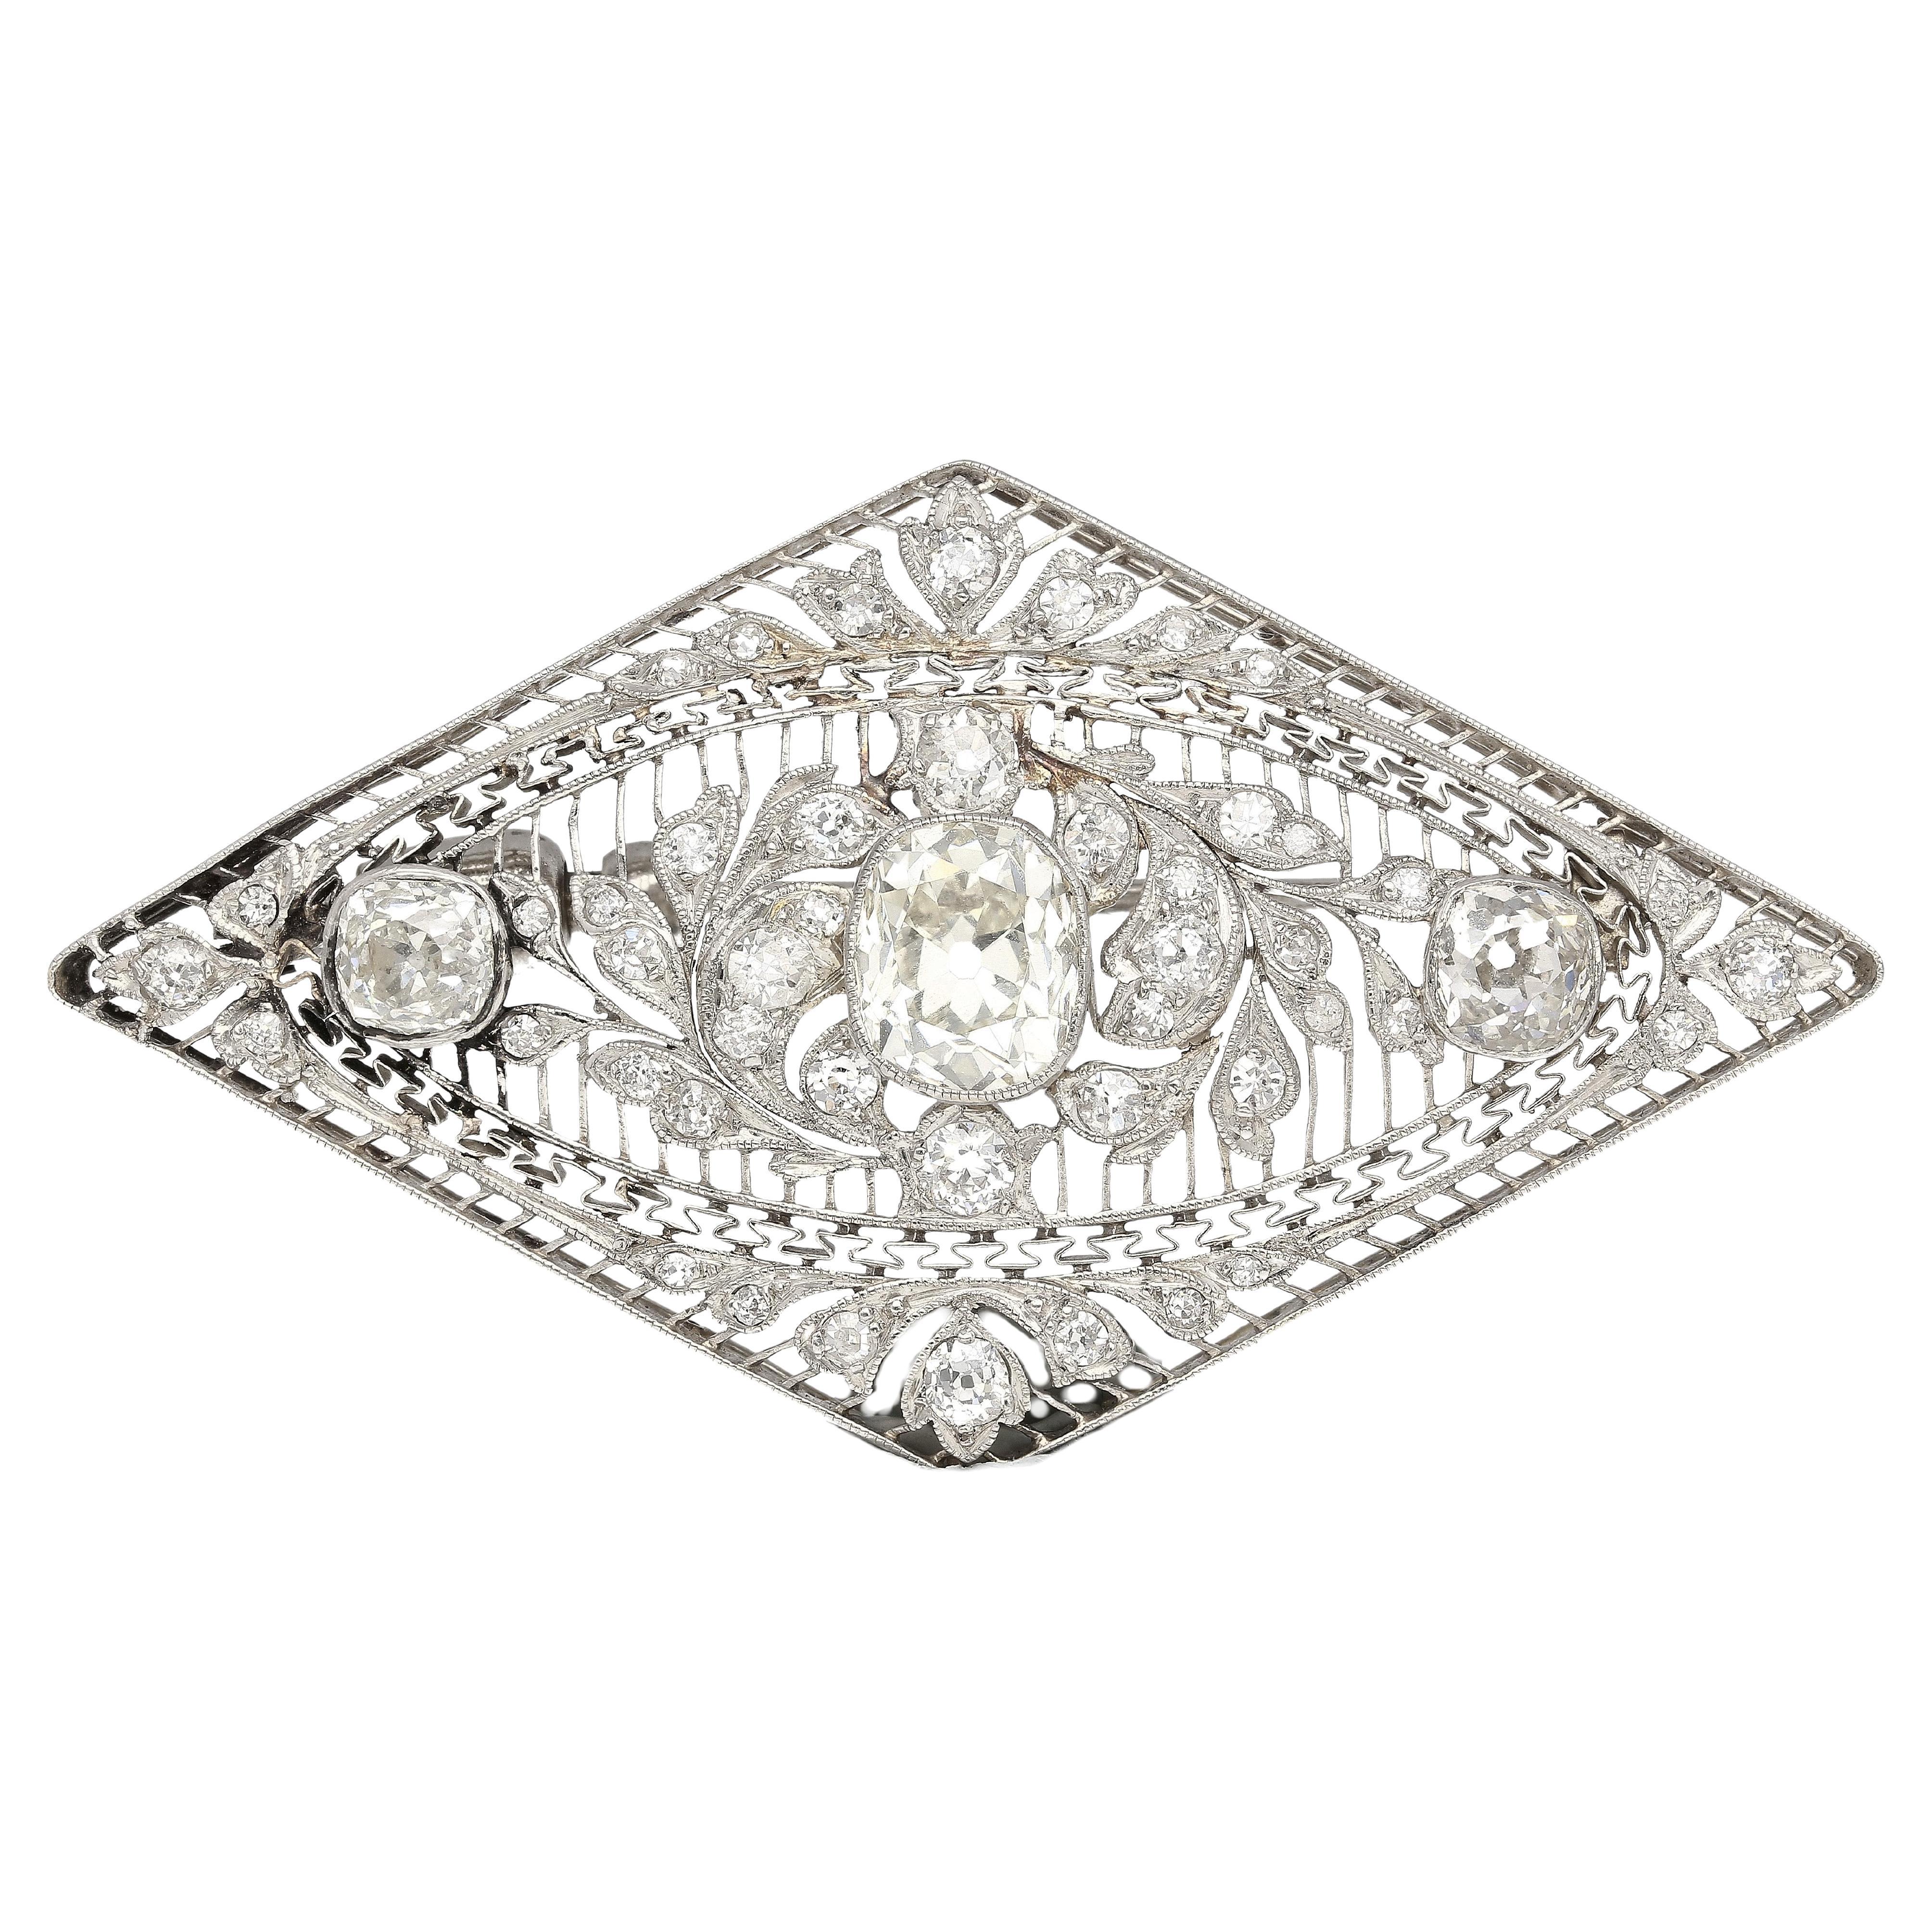 3.5 Carat Old European Cut Art Deco Diamond Brooch in Textured Filigree Platinum For Sale